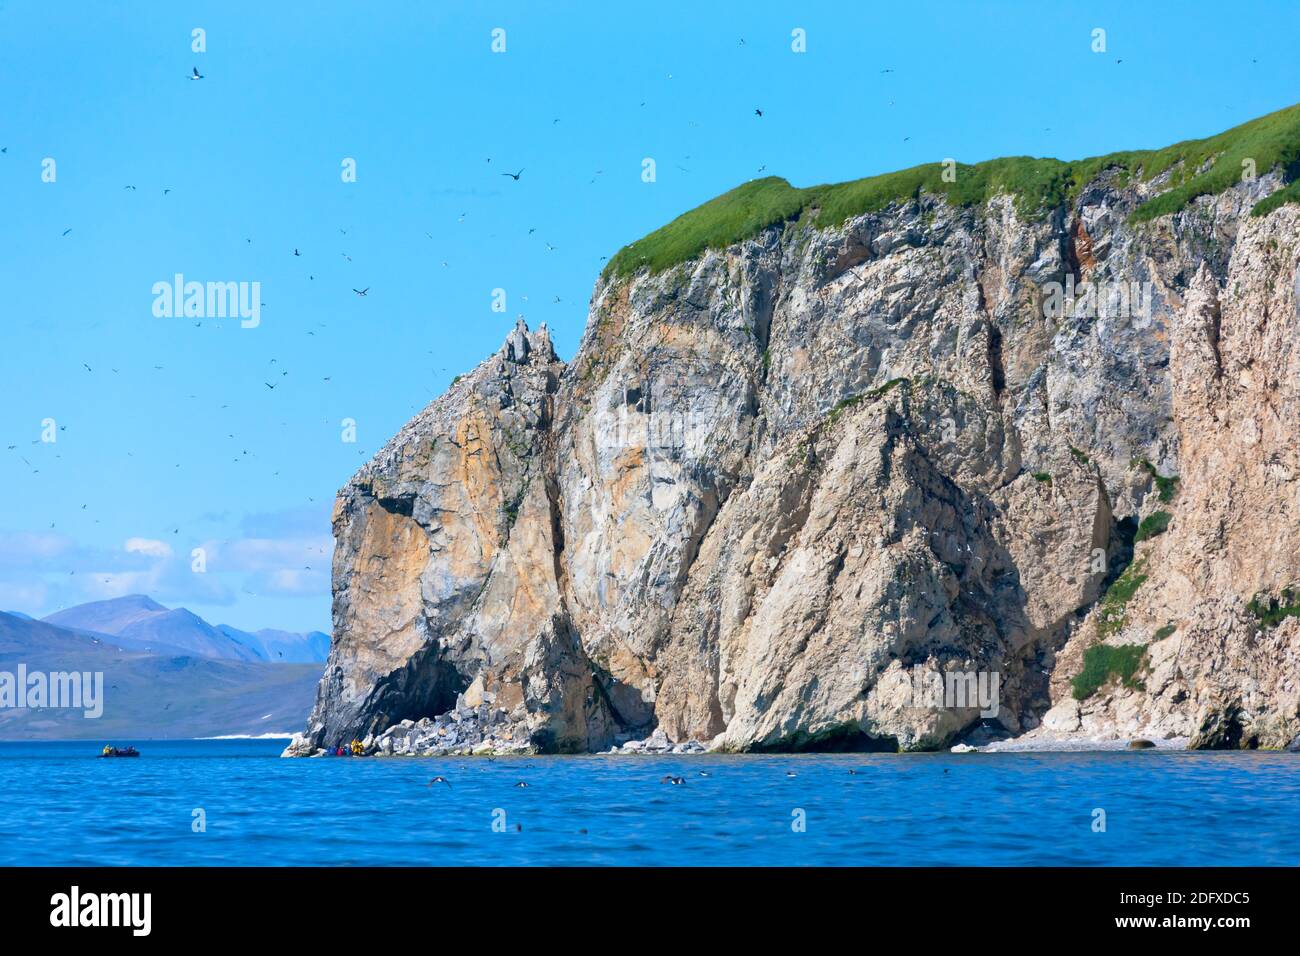 Zodiac nähert sich Nuneangan Insel, Beringmeer, russischen Fernen Osten Stockfoto